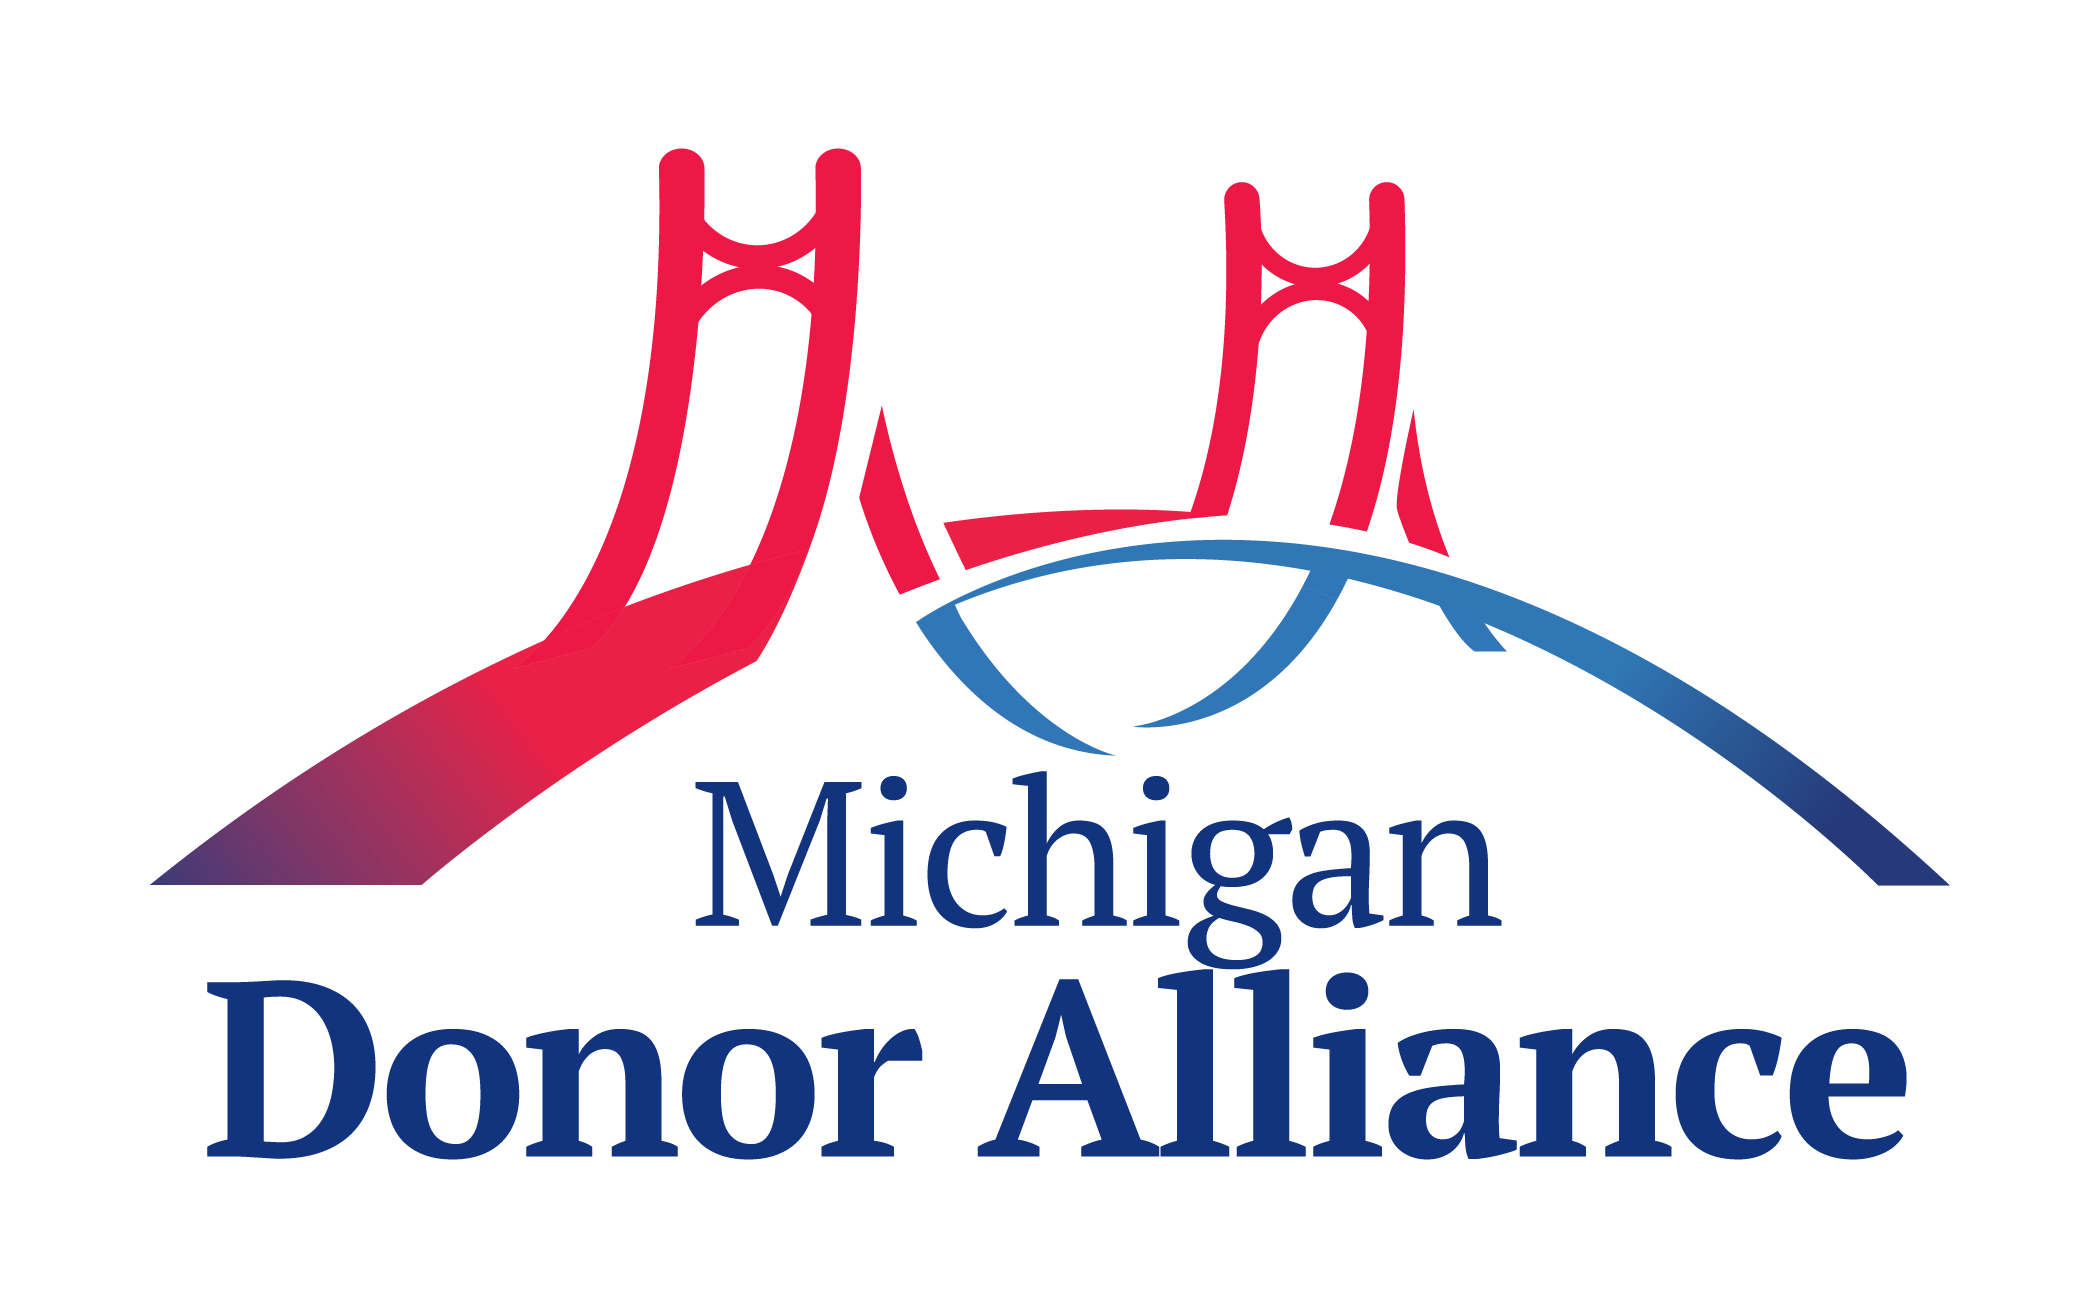 Michigan Donor Alliance